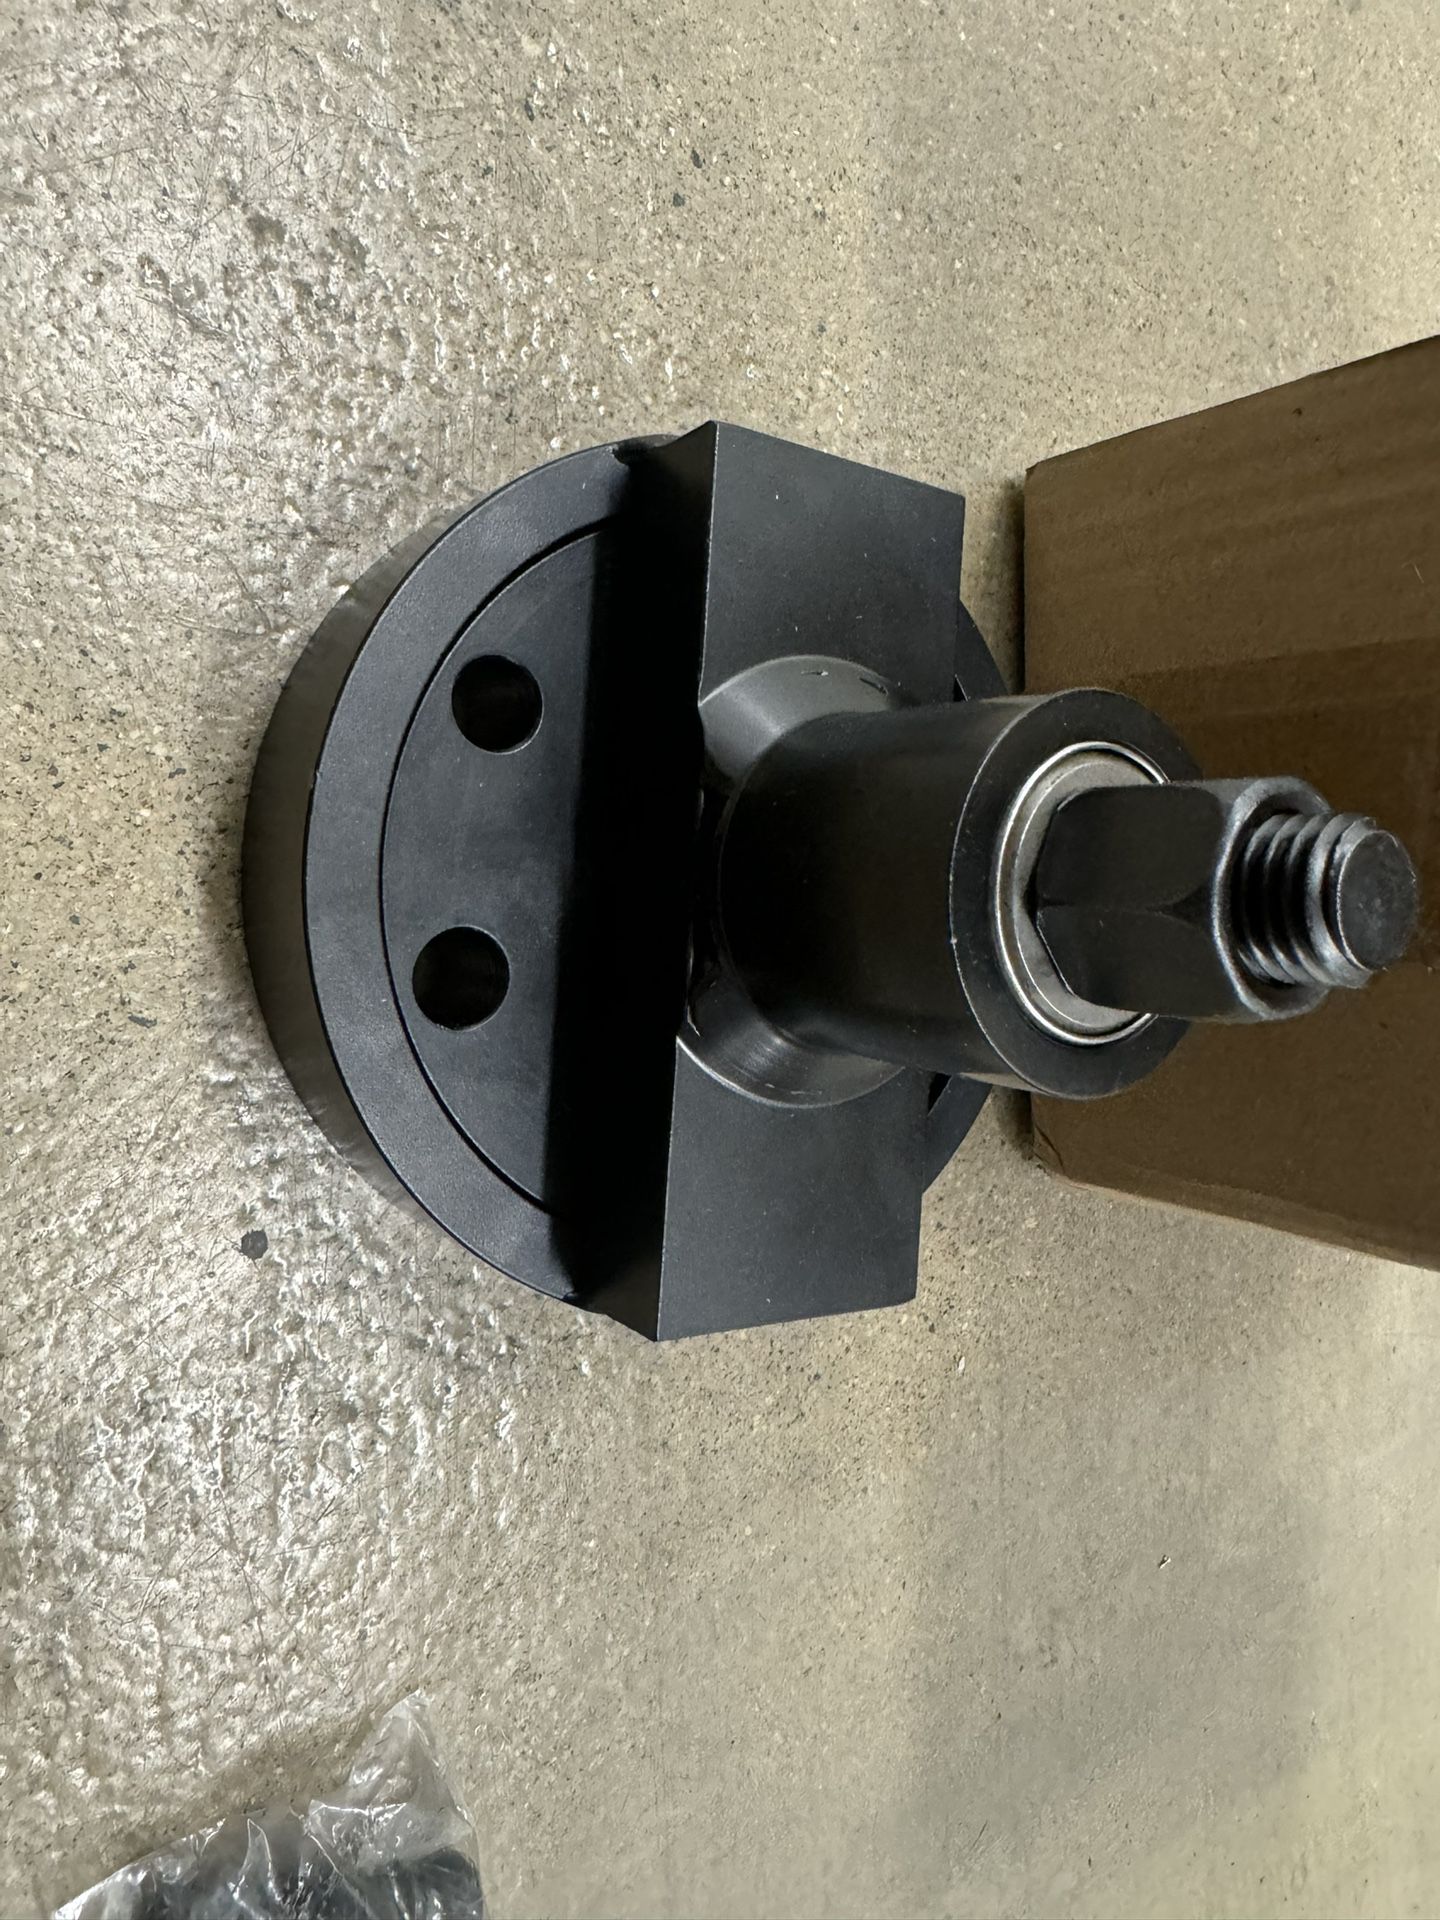 Crankshaft Rear Main Seal Installer For John Deere 7.6L ST-198 engine 6(contact info removed)